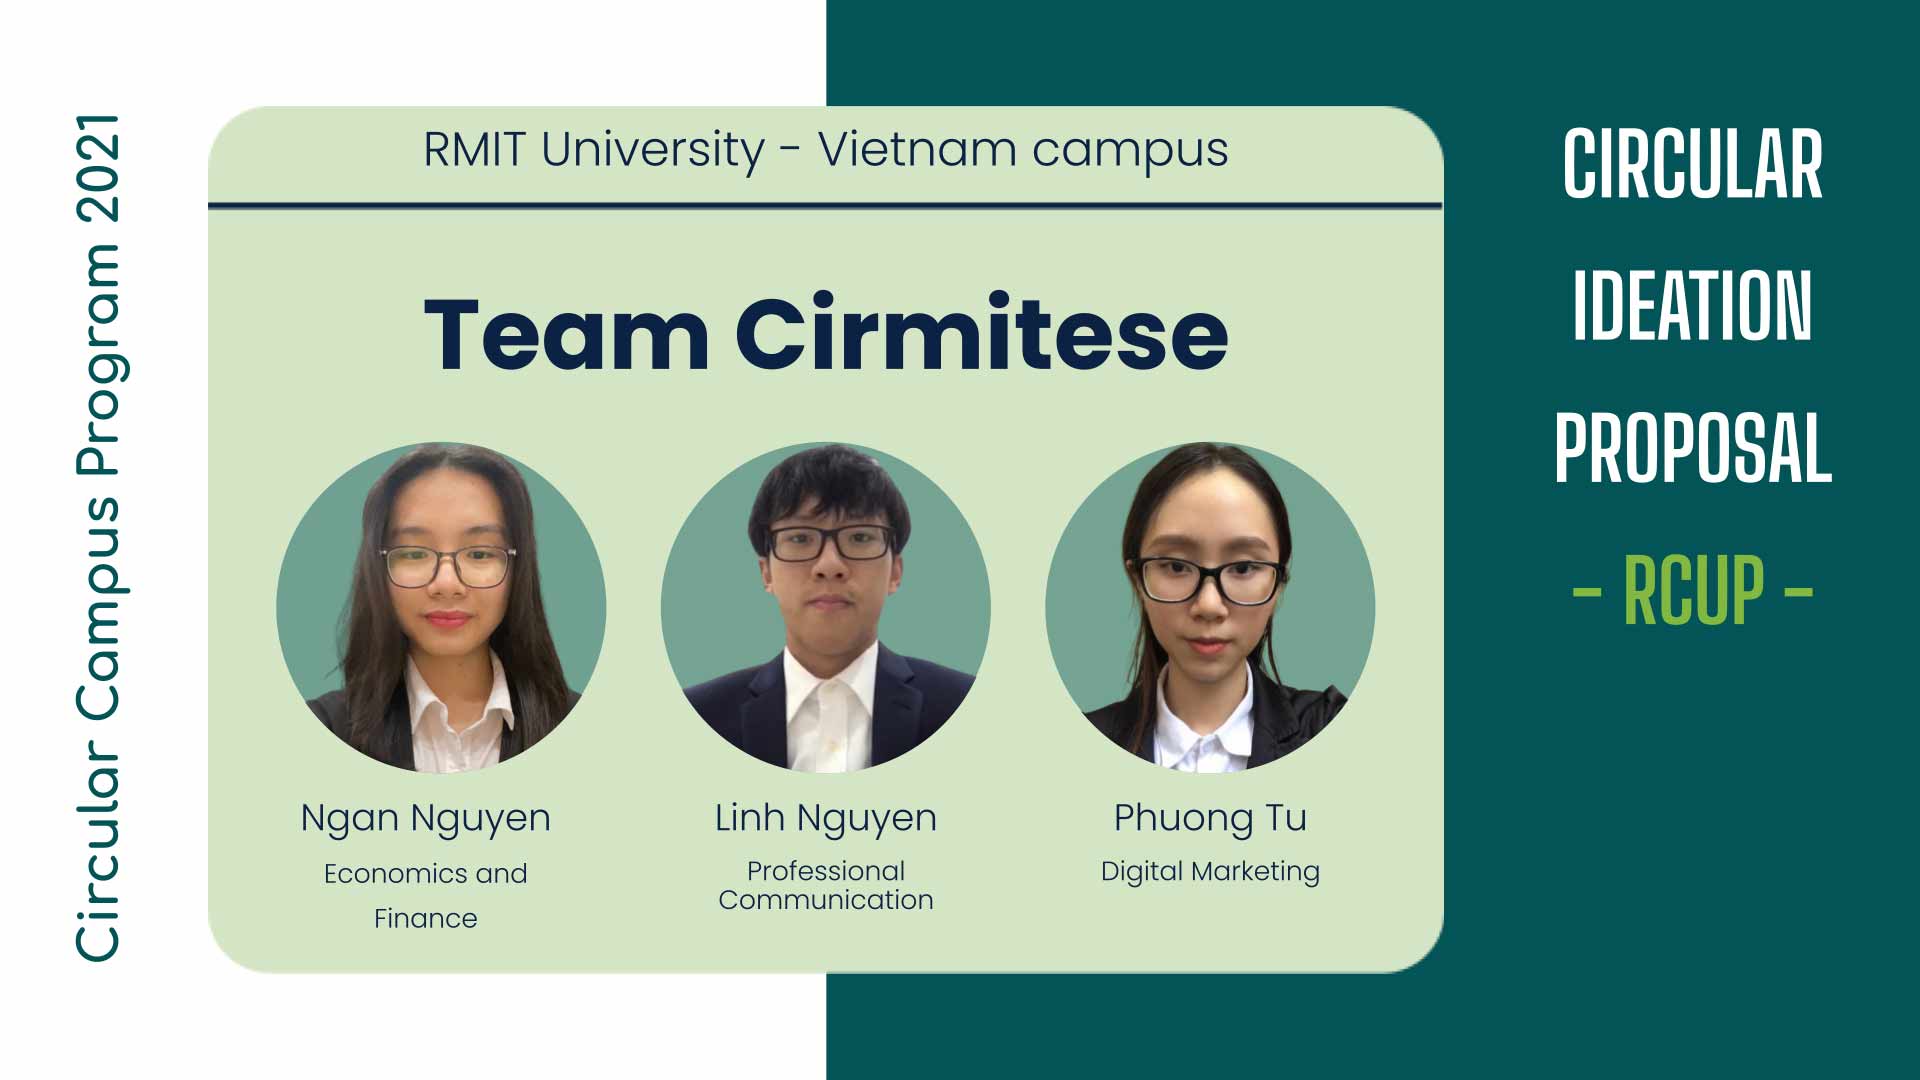 Images of team The Cirmitese including, Ngan Nguyen; Economics and finance, Linh Nguyen; professional communication and Phuong Tu; Digital marketing.